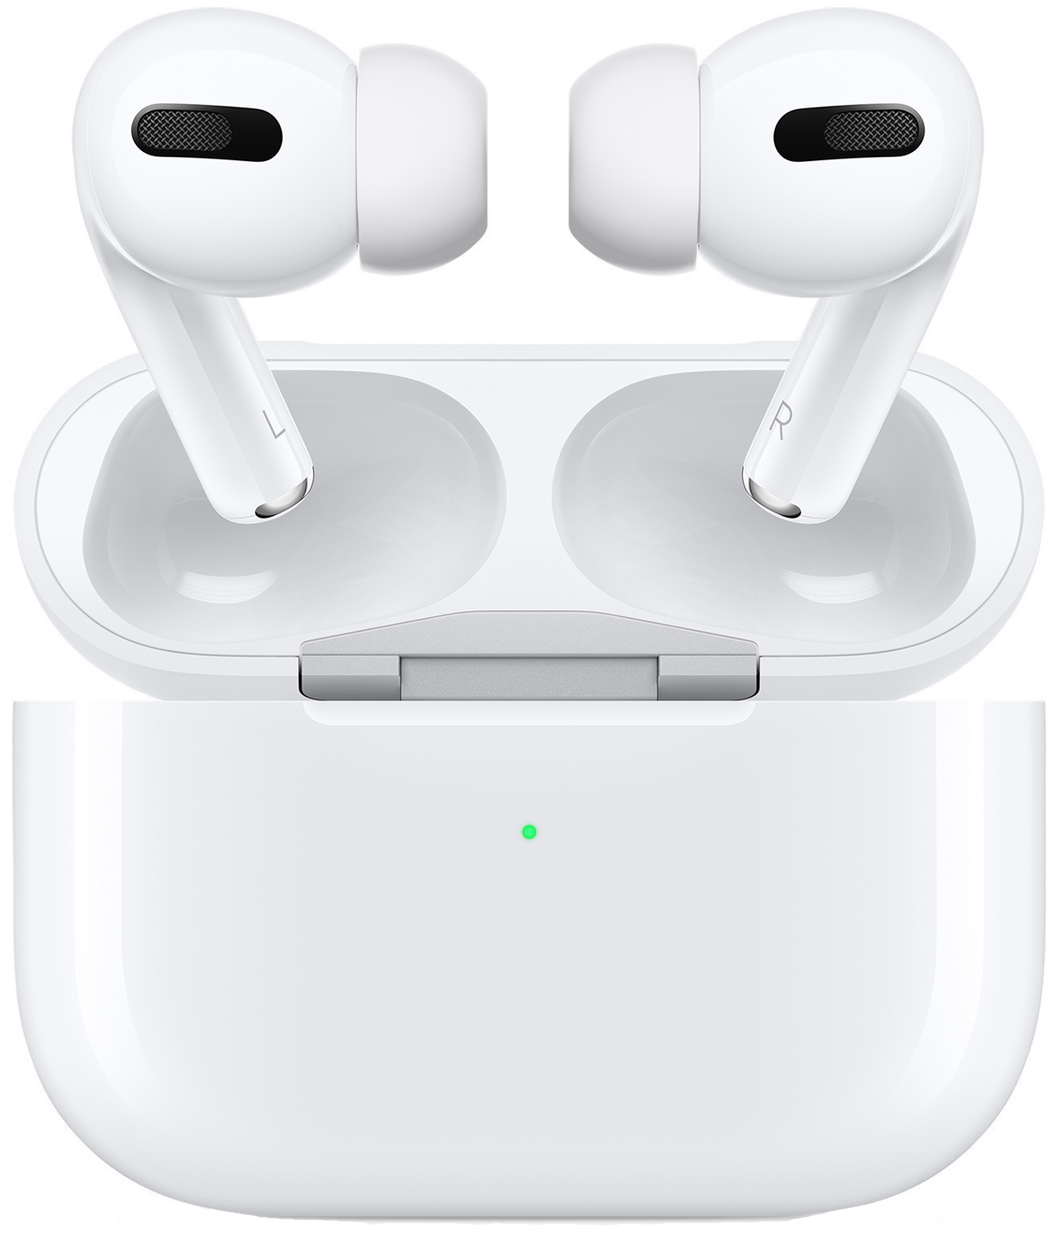 Apple AirPods Pro Bluetooth Wireless In-Ear True Earphones With Mic - Noise-Canceling, White